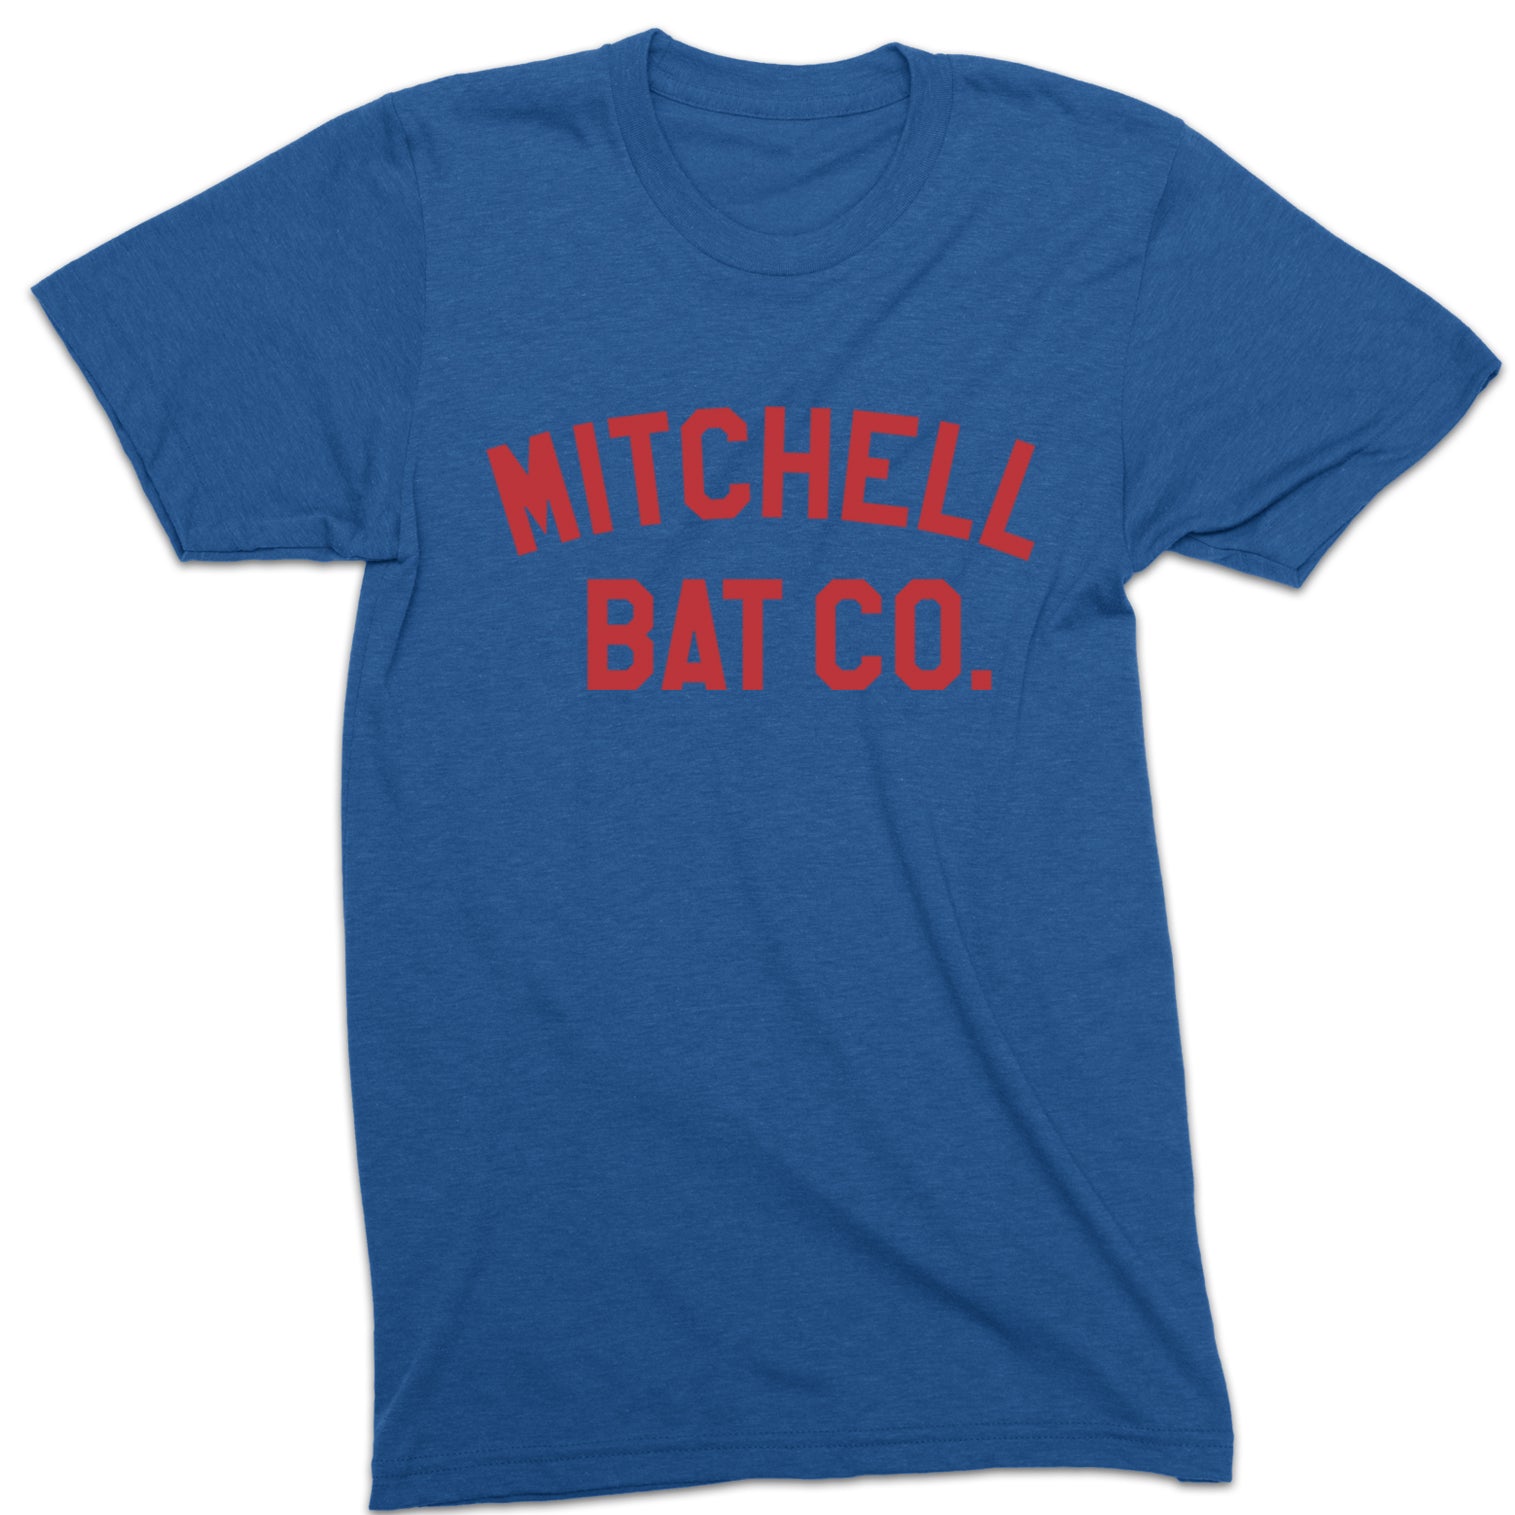 Mitchell Bat Co. short sleeve block tee (royal blue/red)